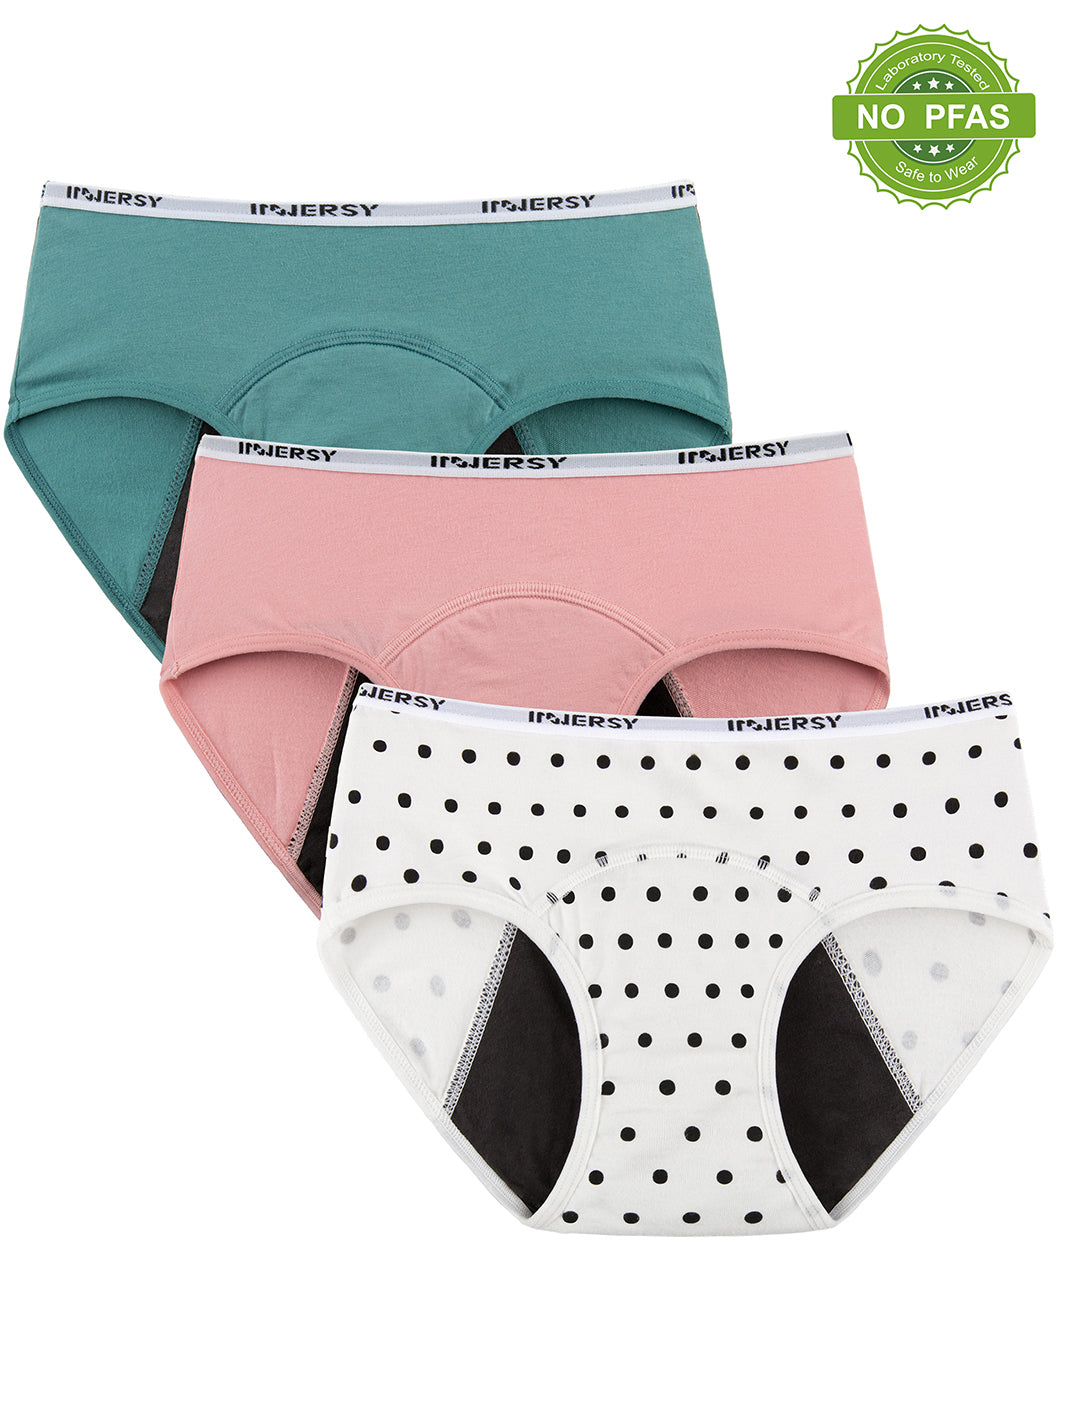 INNERSY Boyshorts Underwear for Women Cotton Women's Panties Boxer Briefs  3-Pack